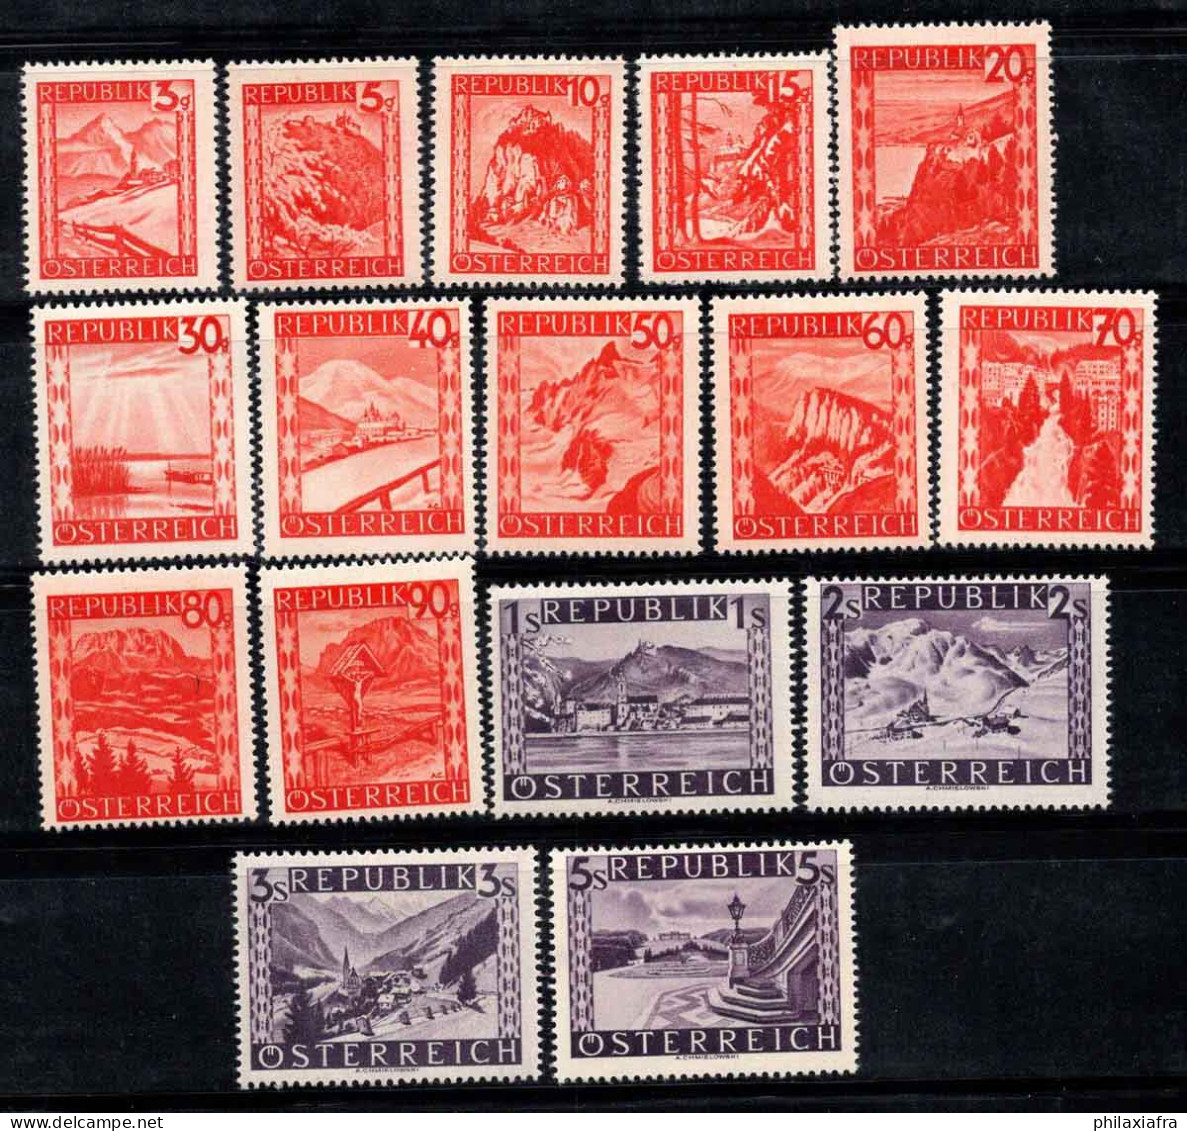 Autriche 1947 Mi. 838-853 Neuf * MH 100% Paysages - Nuovi